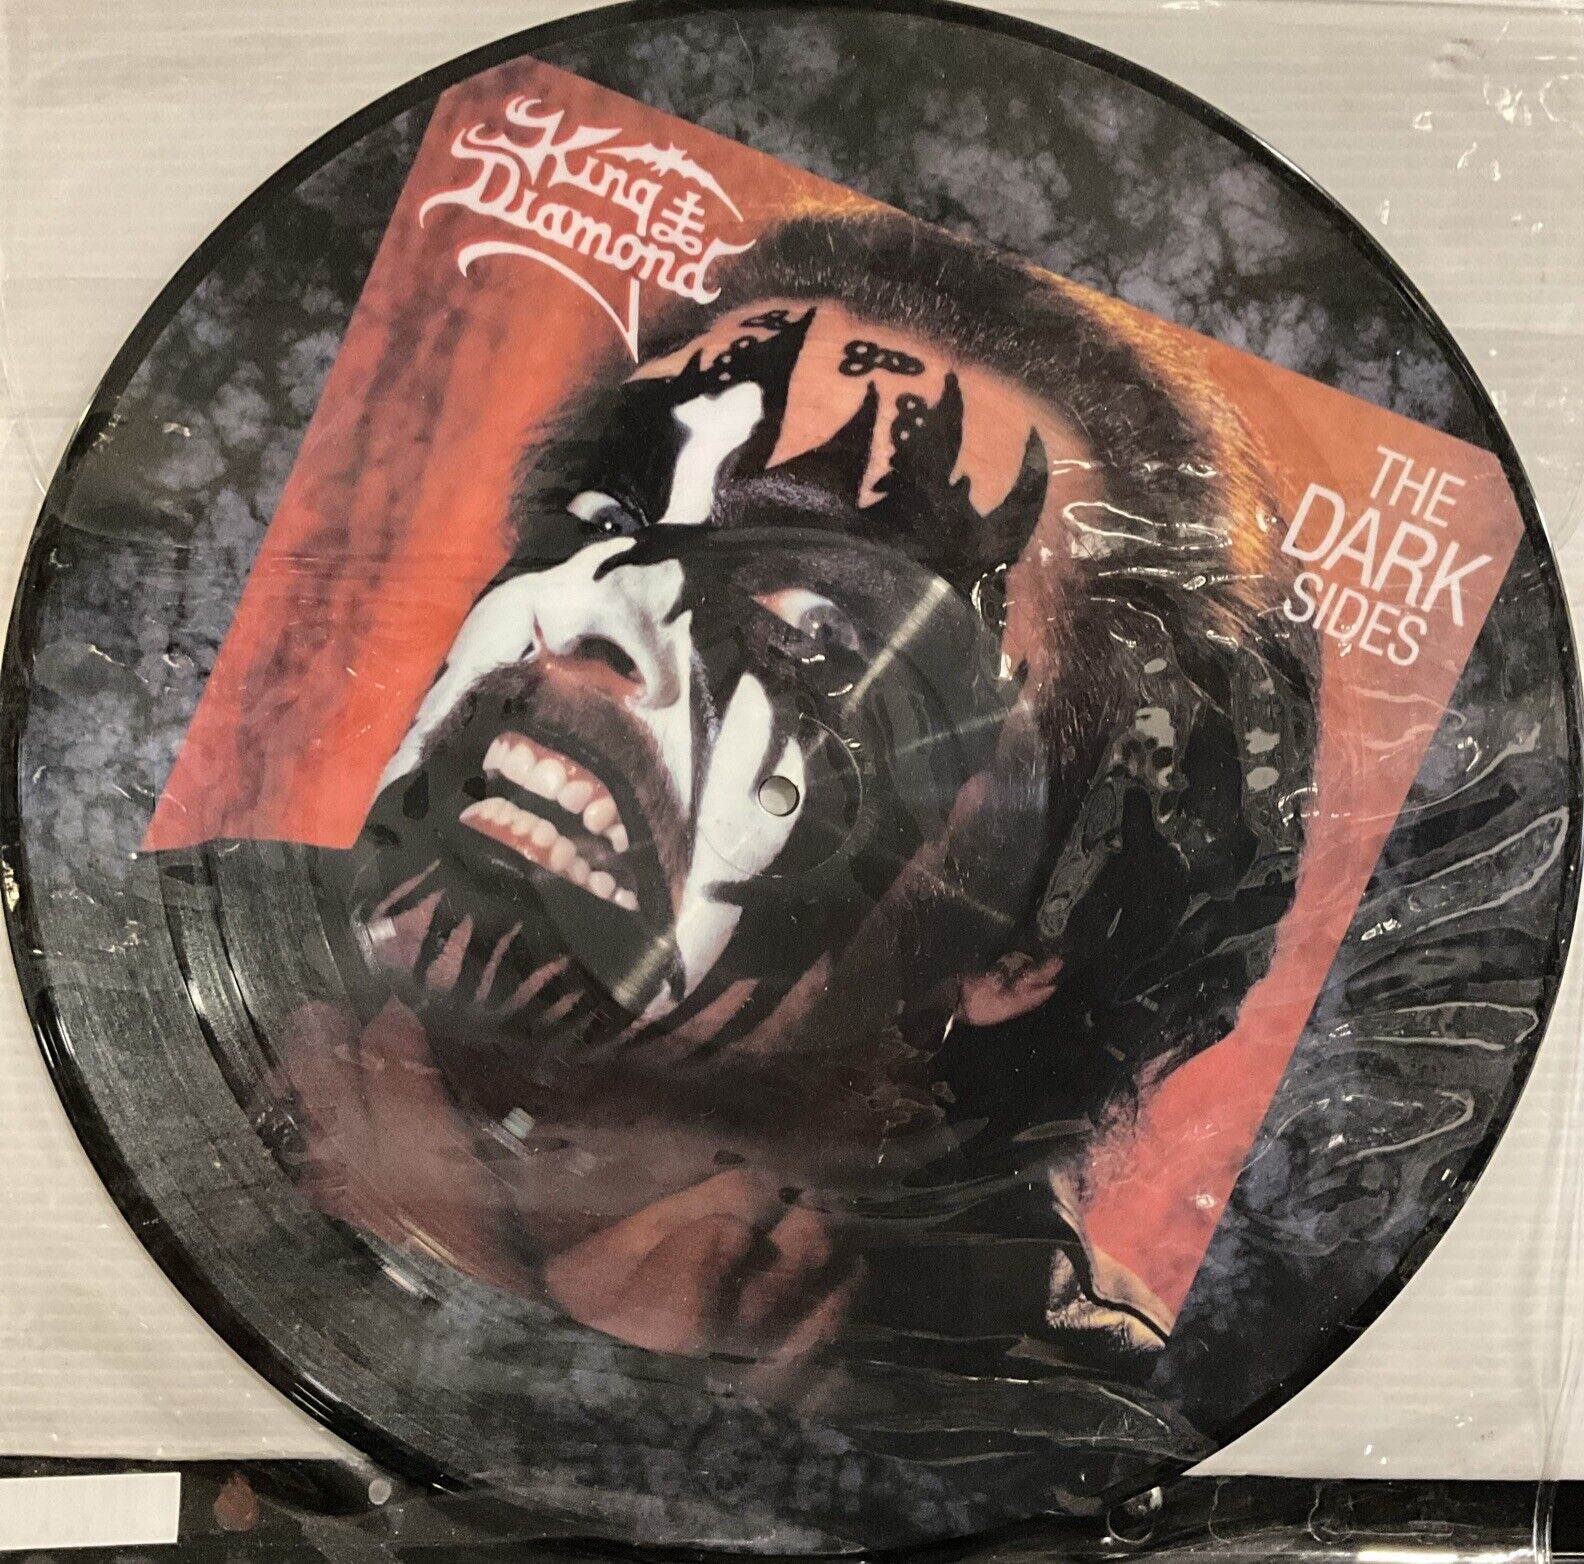 King Diamond - The Dark Sides LP Picture Disc 2018 Metal Blade - 3984-25058-1 NM